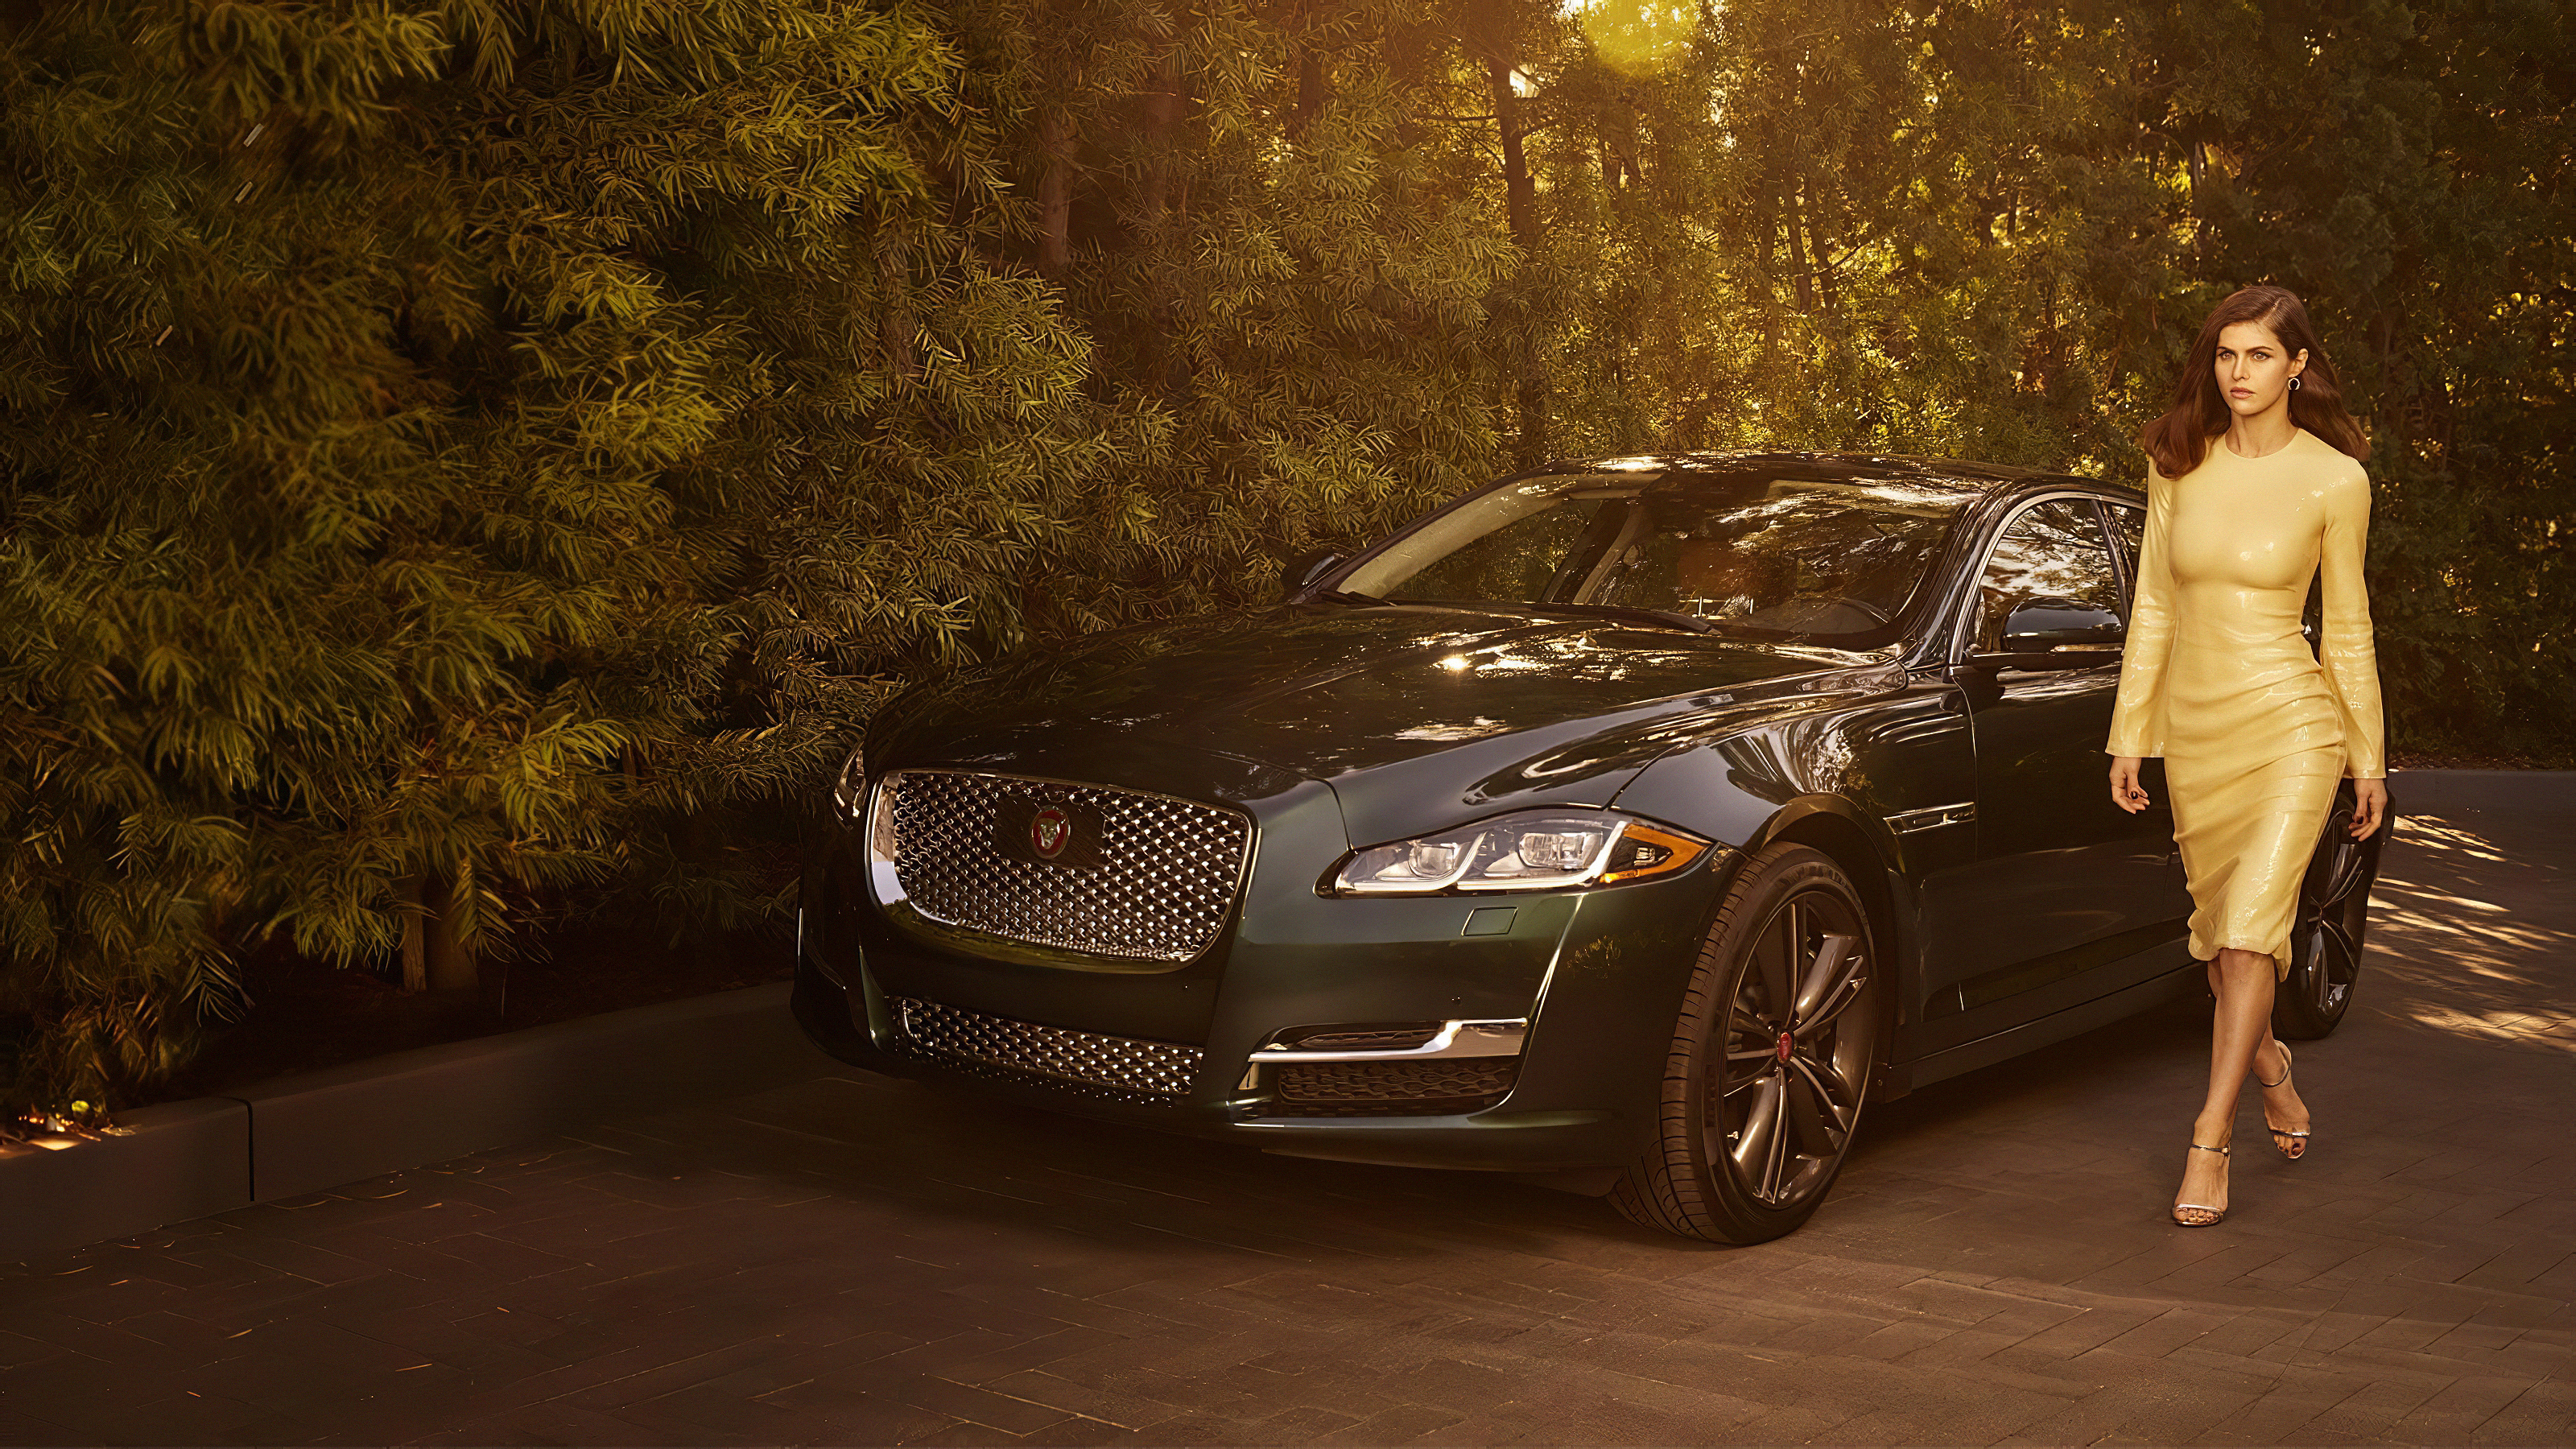 100+] Jaguar Car Wallpapers | Wallpapers.com